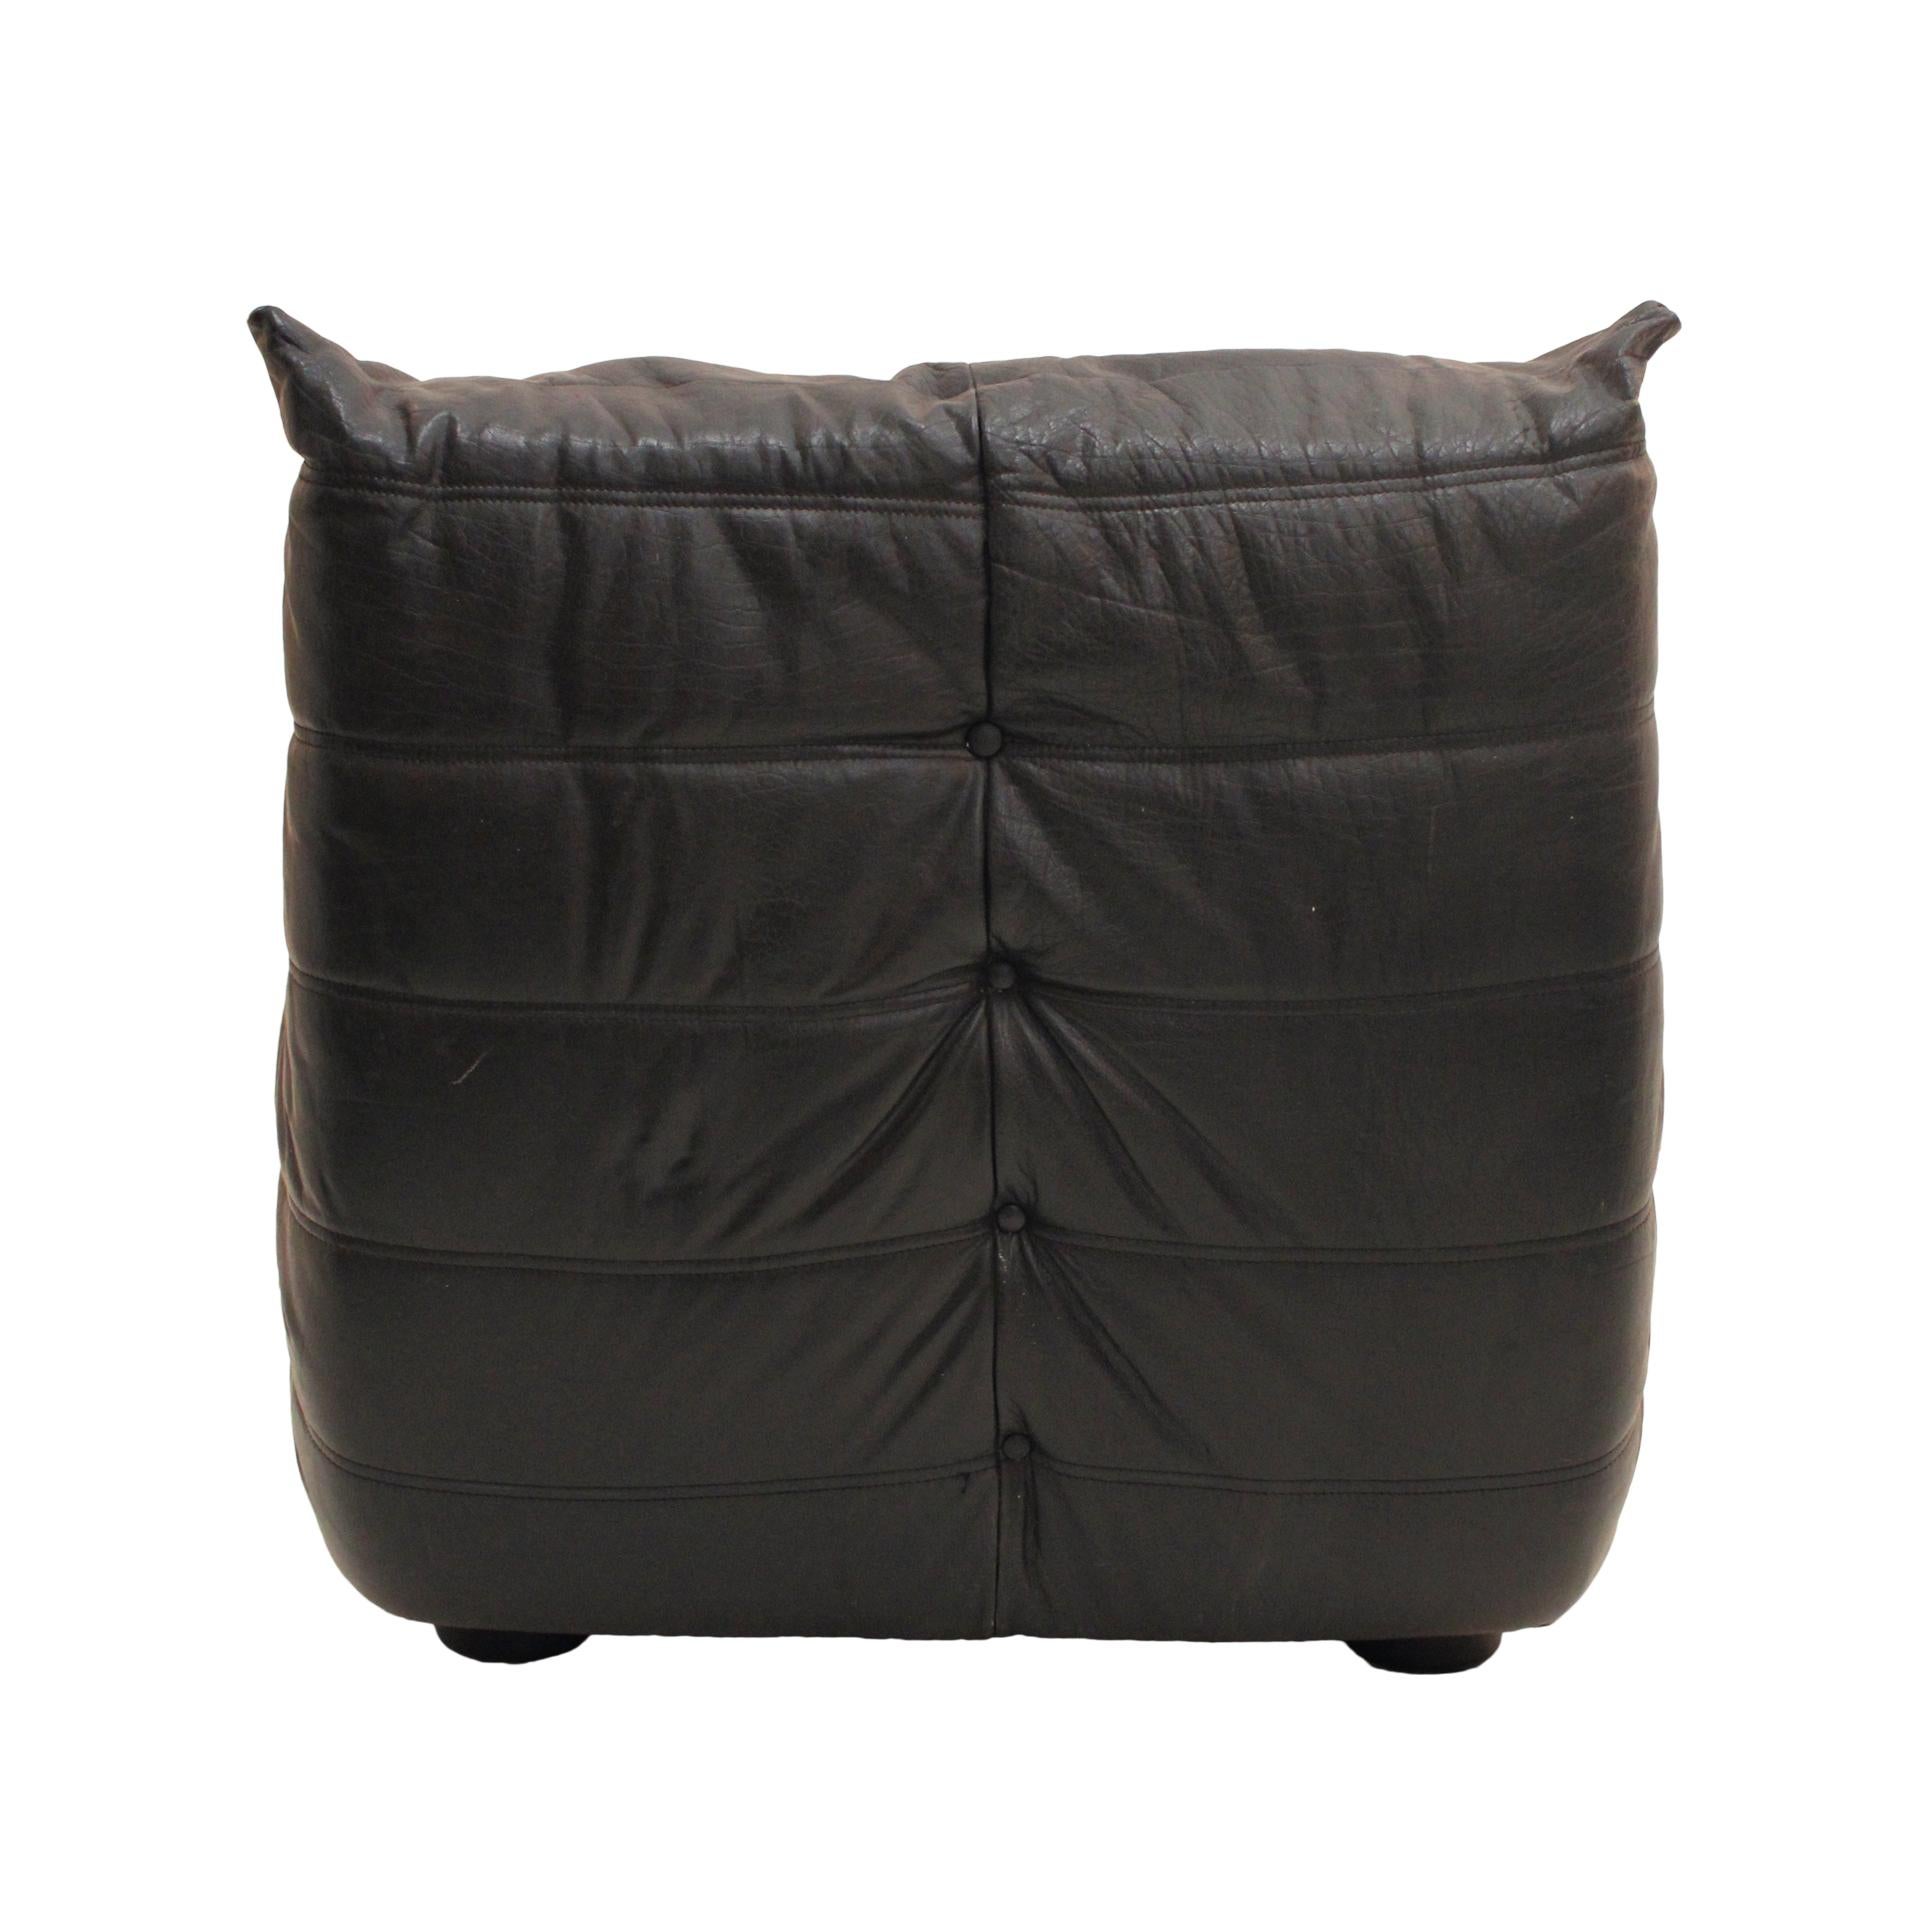 Original Ligne Roset Togo Black Leather Lounge Chair Designed by Michel Ducaroy 1